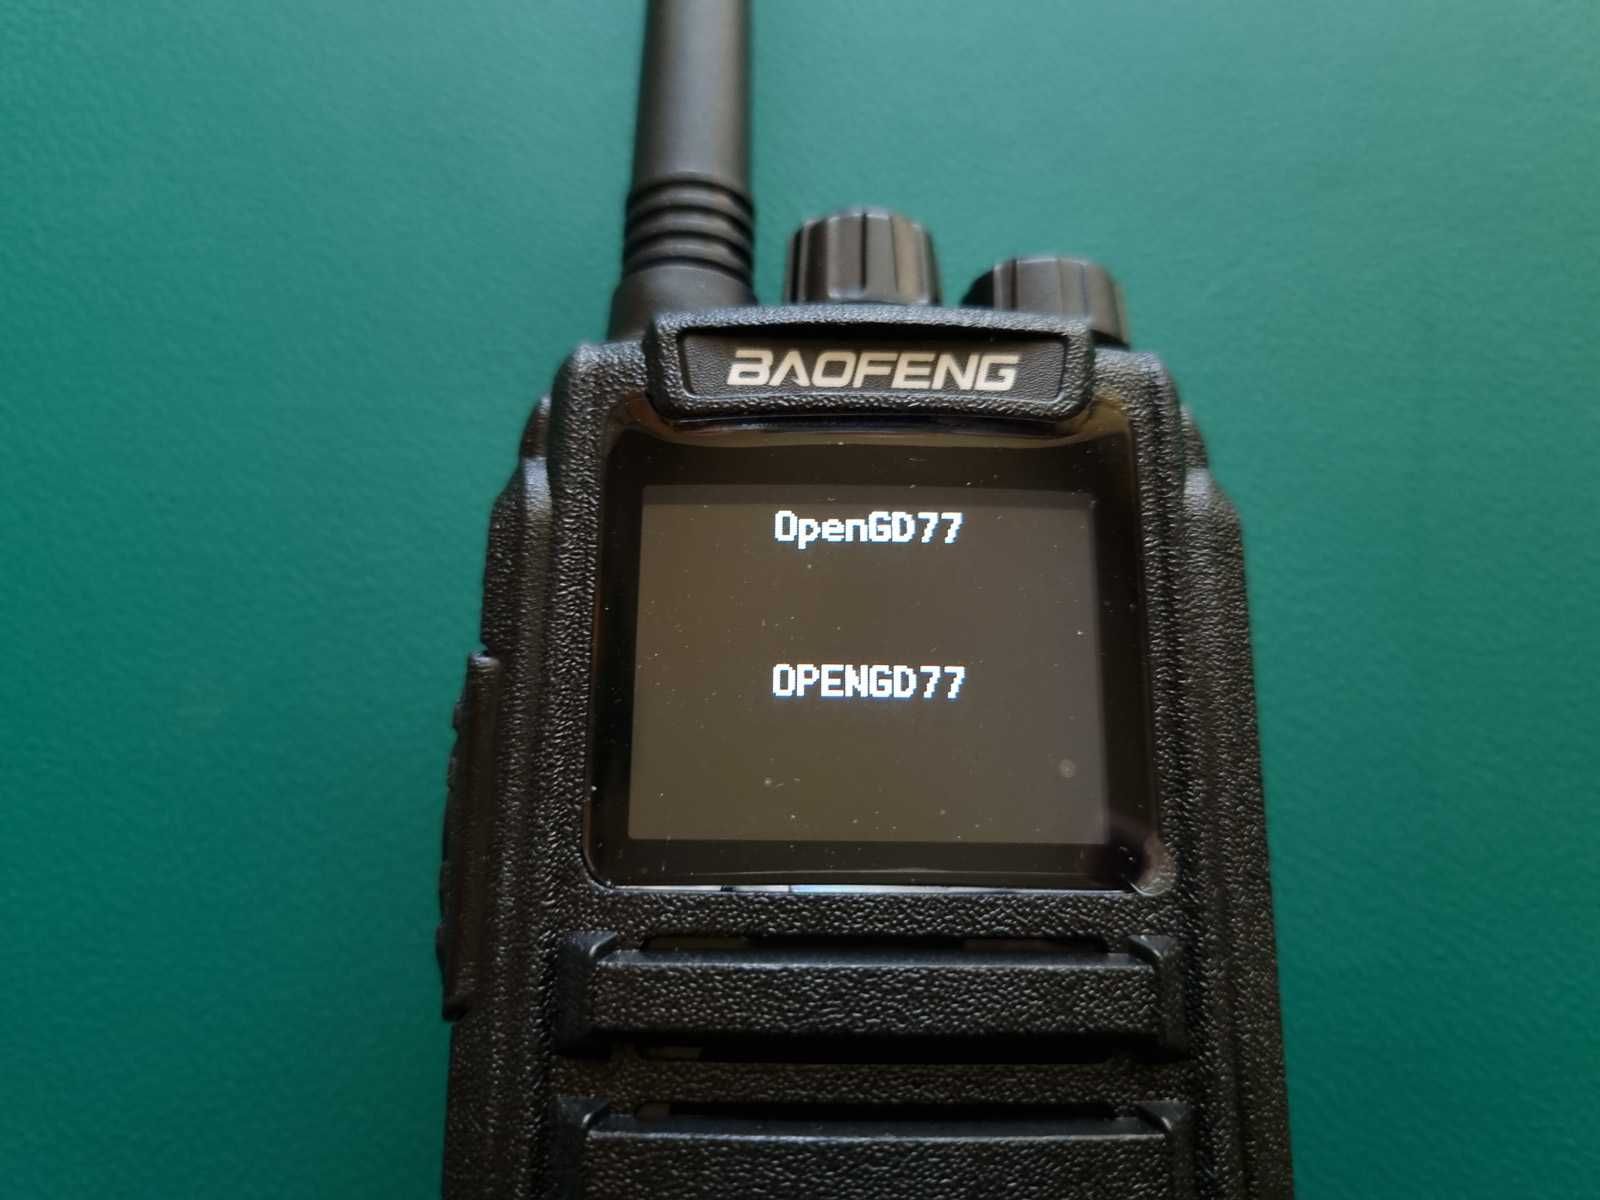 NOWY Baofeng DM-1701 DMR Open GD77 + kabel